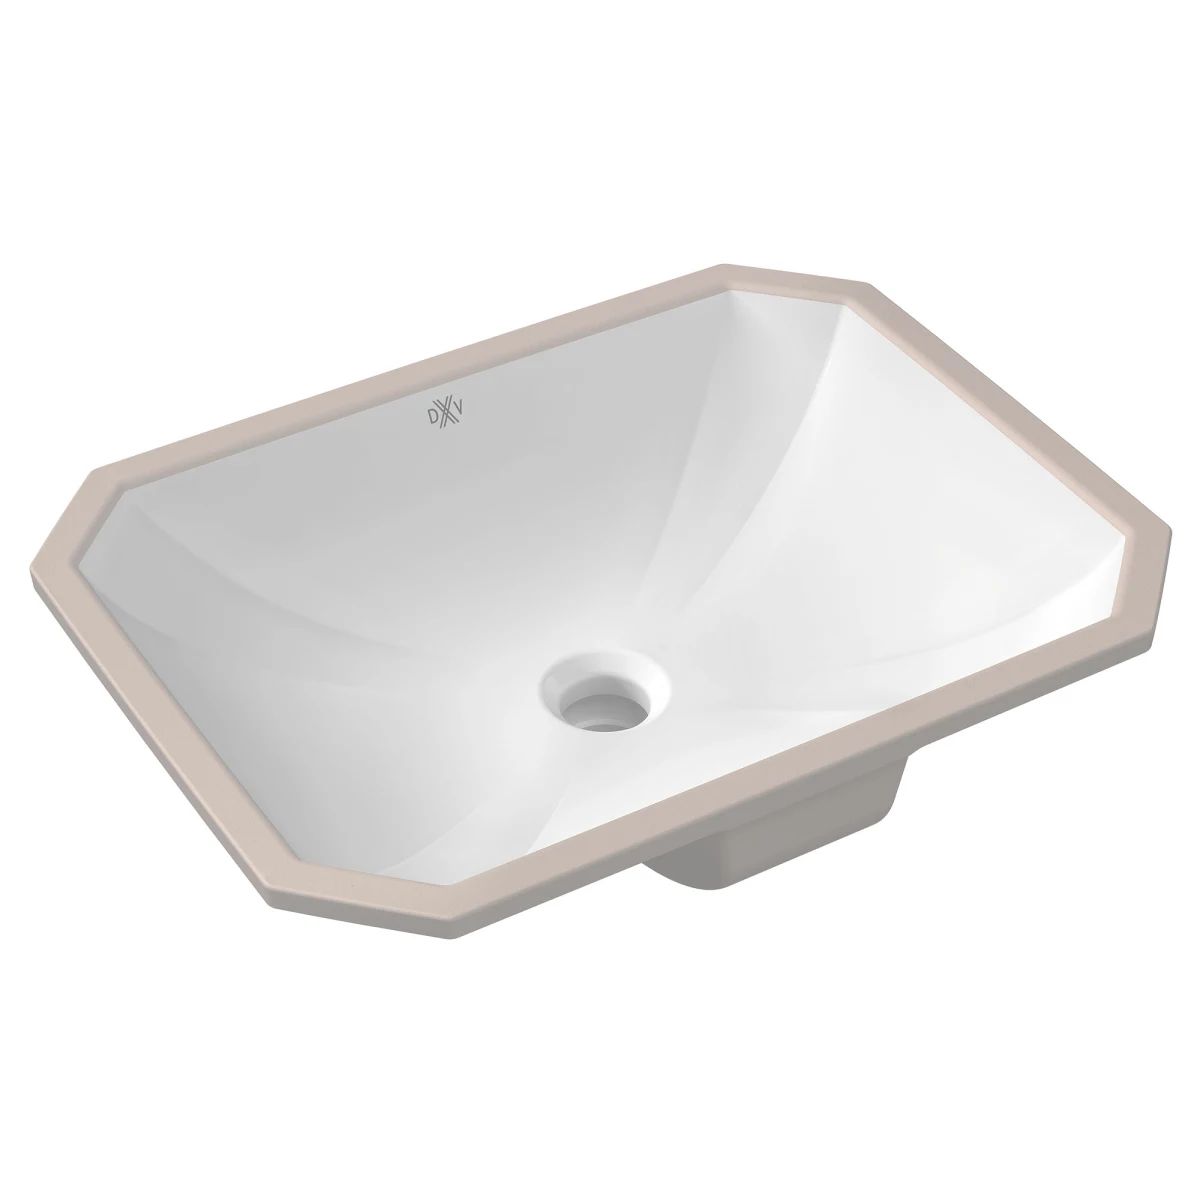 Belshire Undermount Sink | Build.com, Inc.